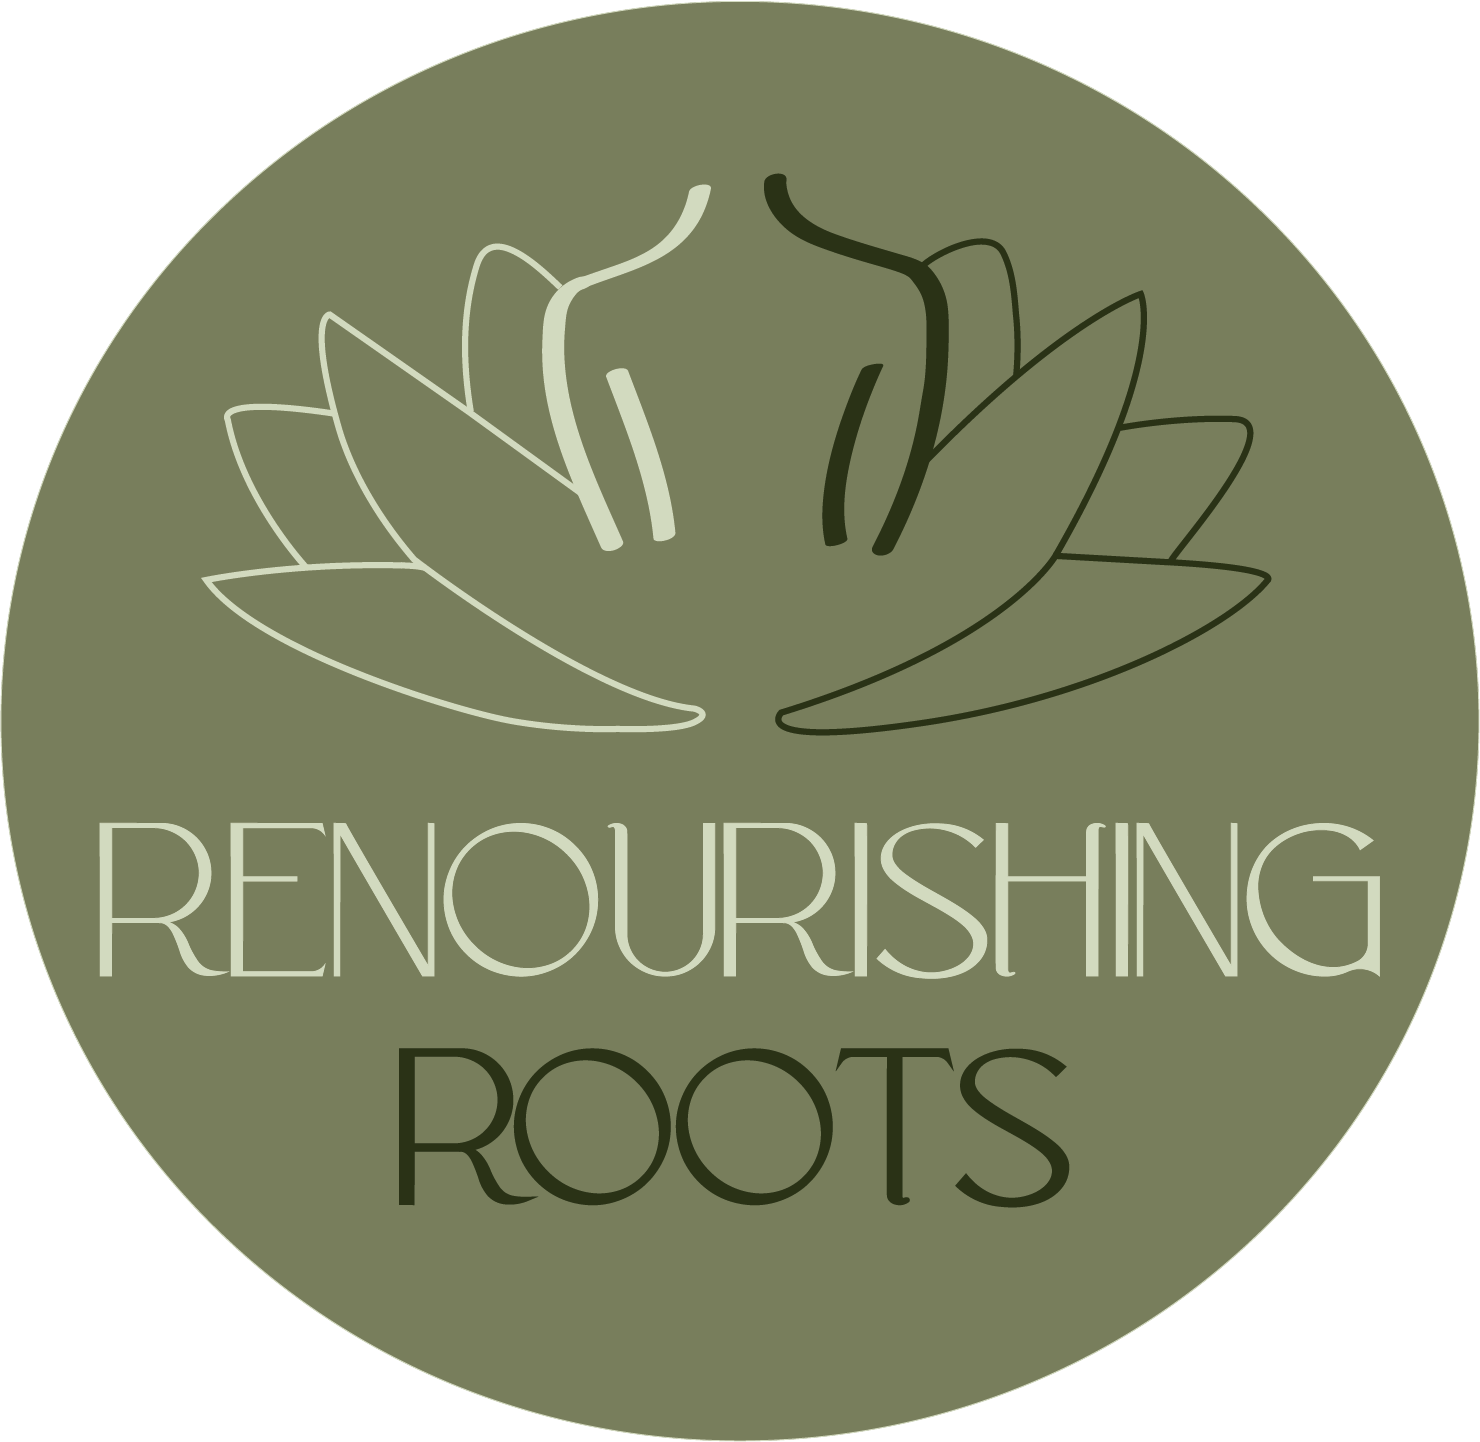 Renourishing Roots